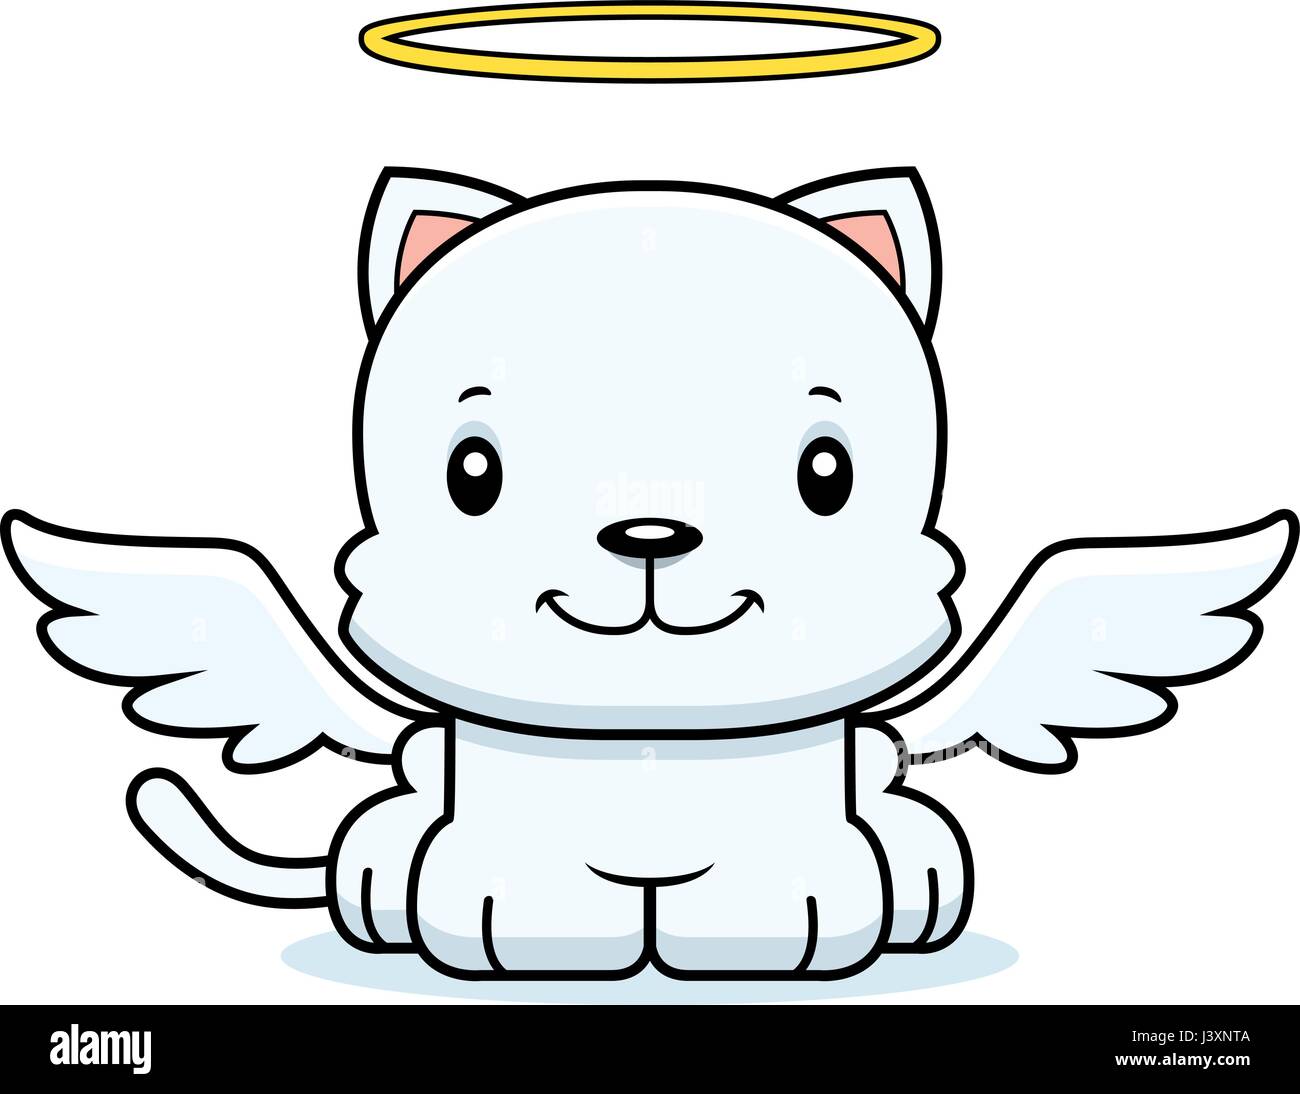 A cartoon angel kitten smiling. Stock Vector